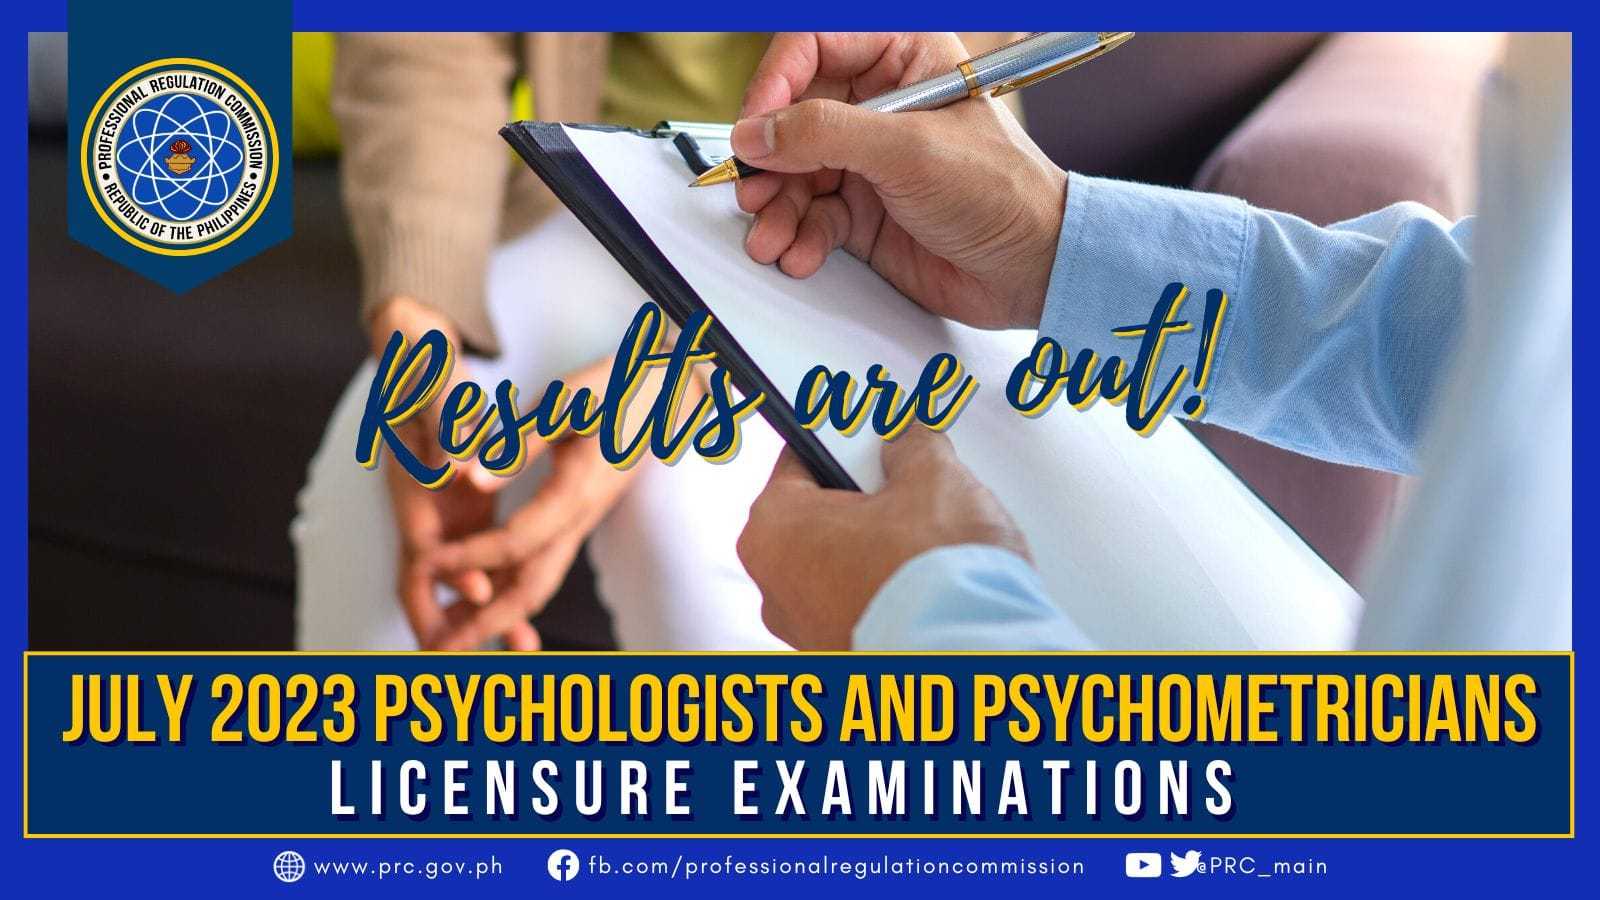 339 pass psychologists licensure exam; 6,133 pass psychometricians test — PRC